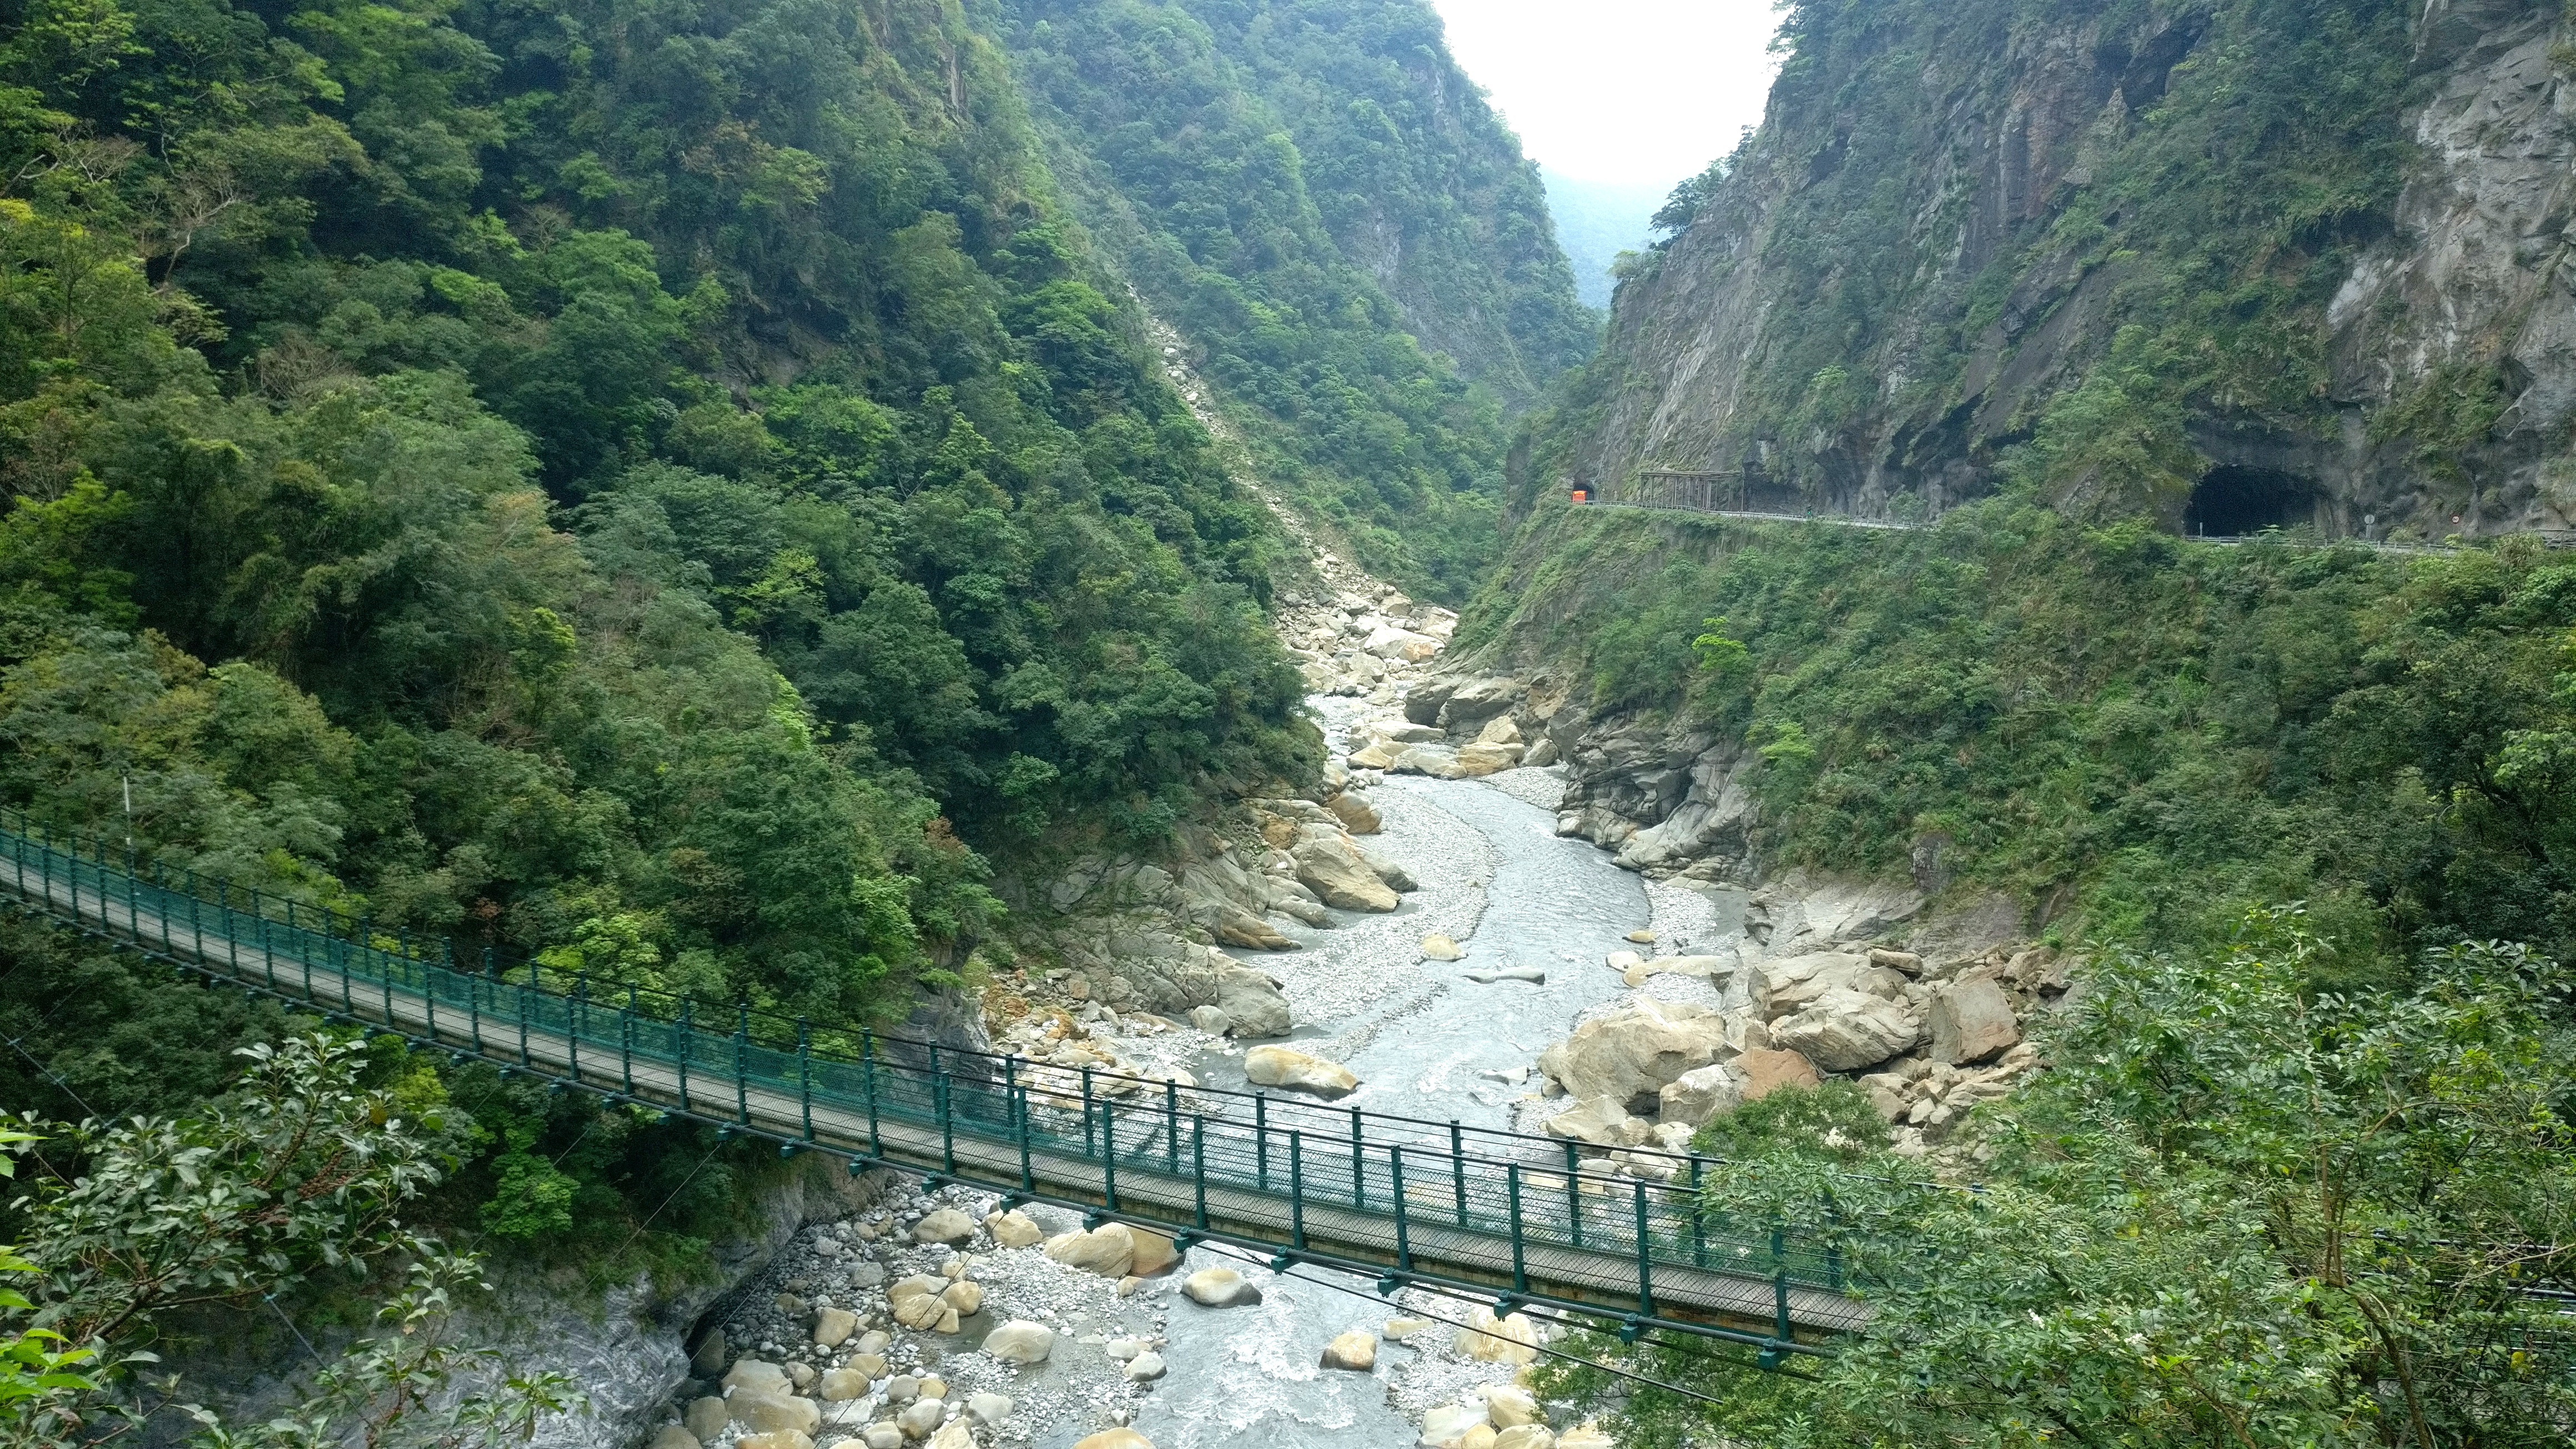 Day trip to Taroko Gorge